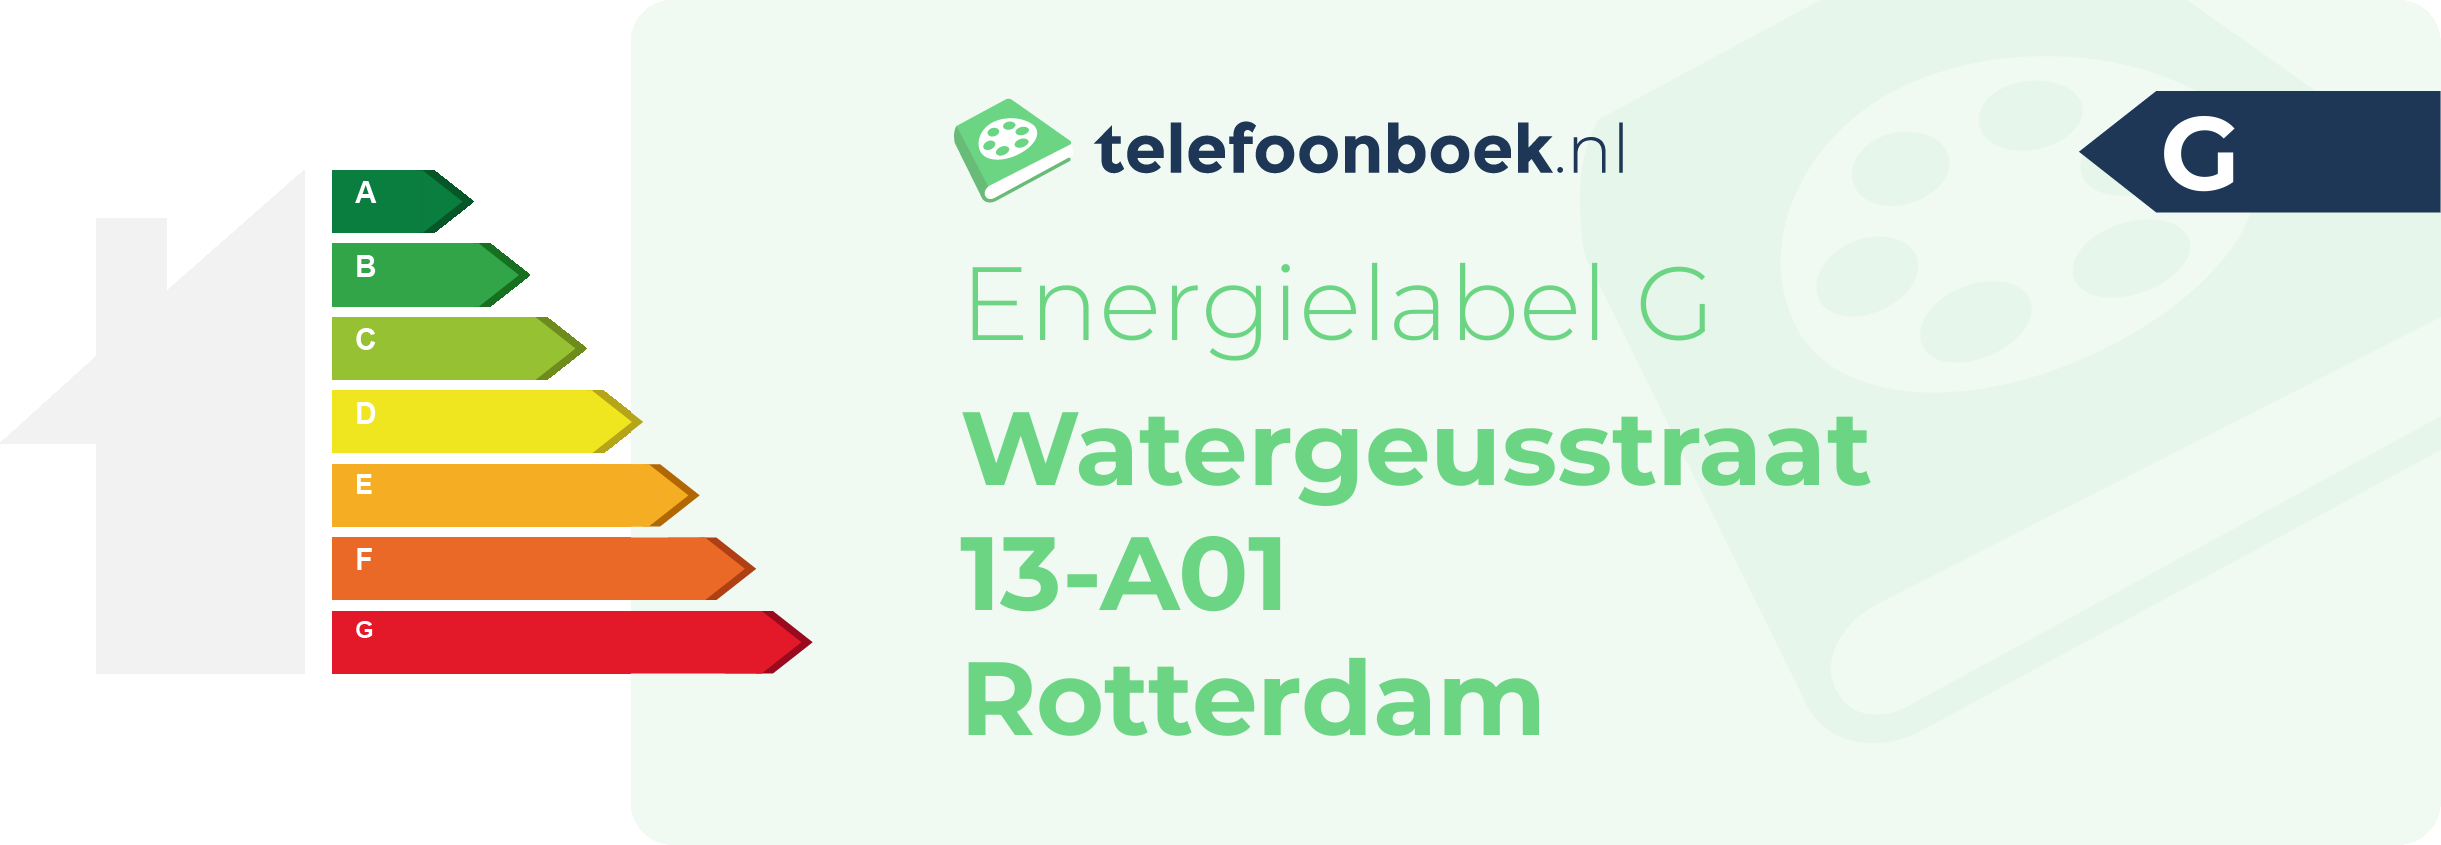 Energielabel Watergeusstraat 13-A01 Rotterdam